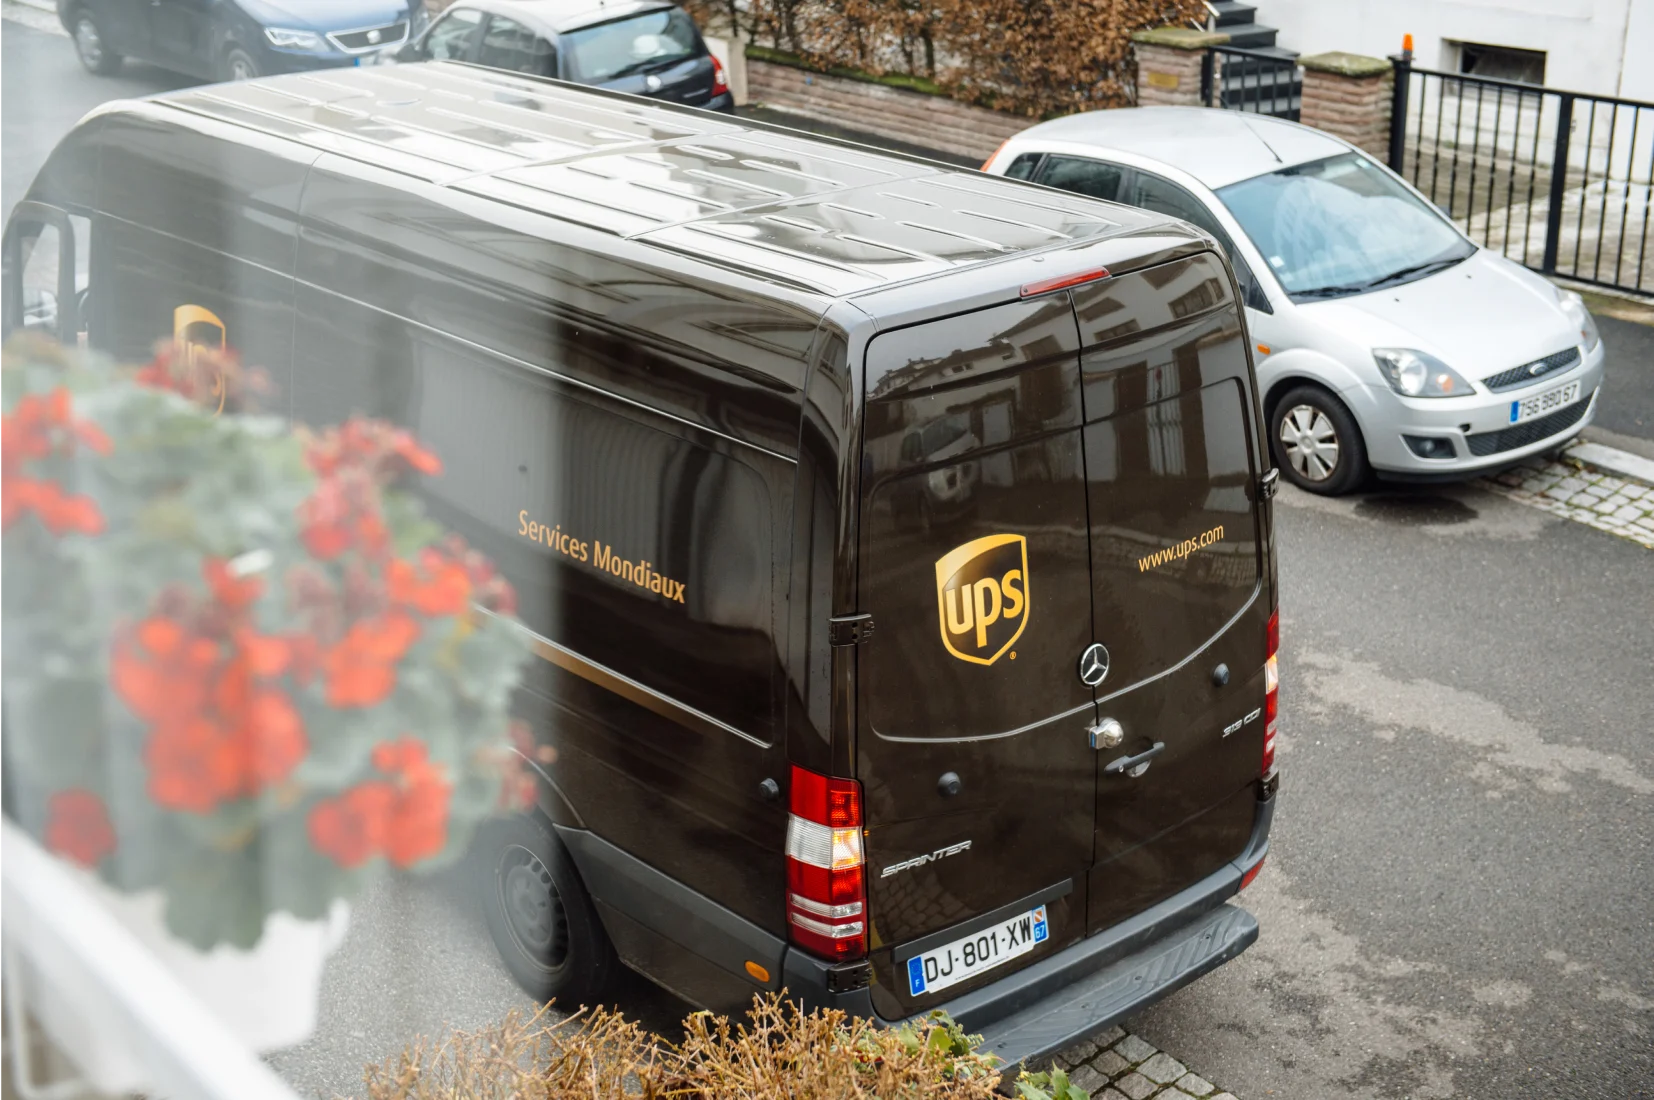 UPS Courier back of van on street